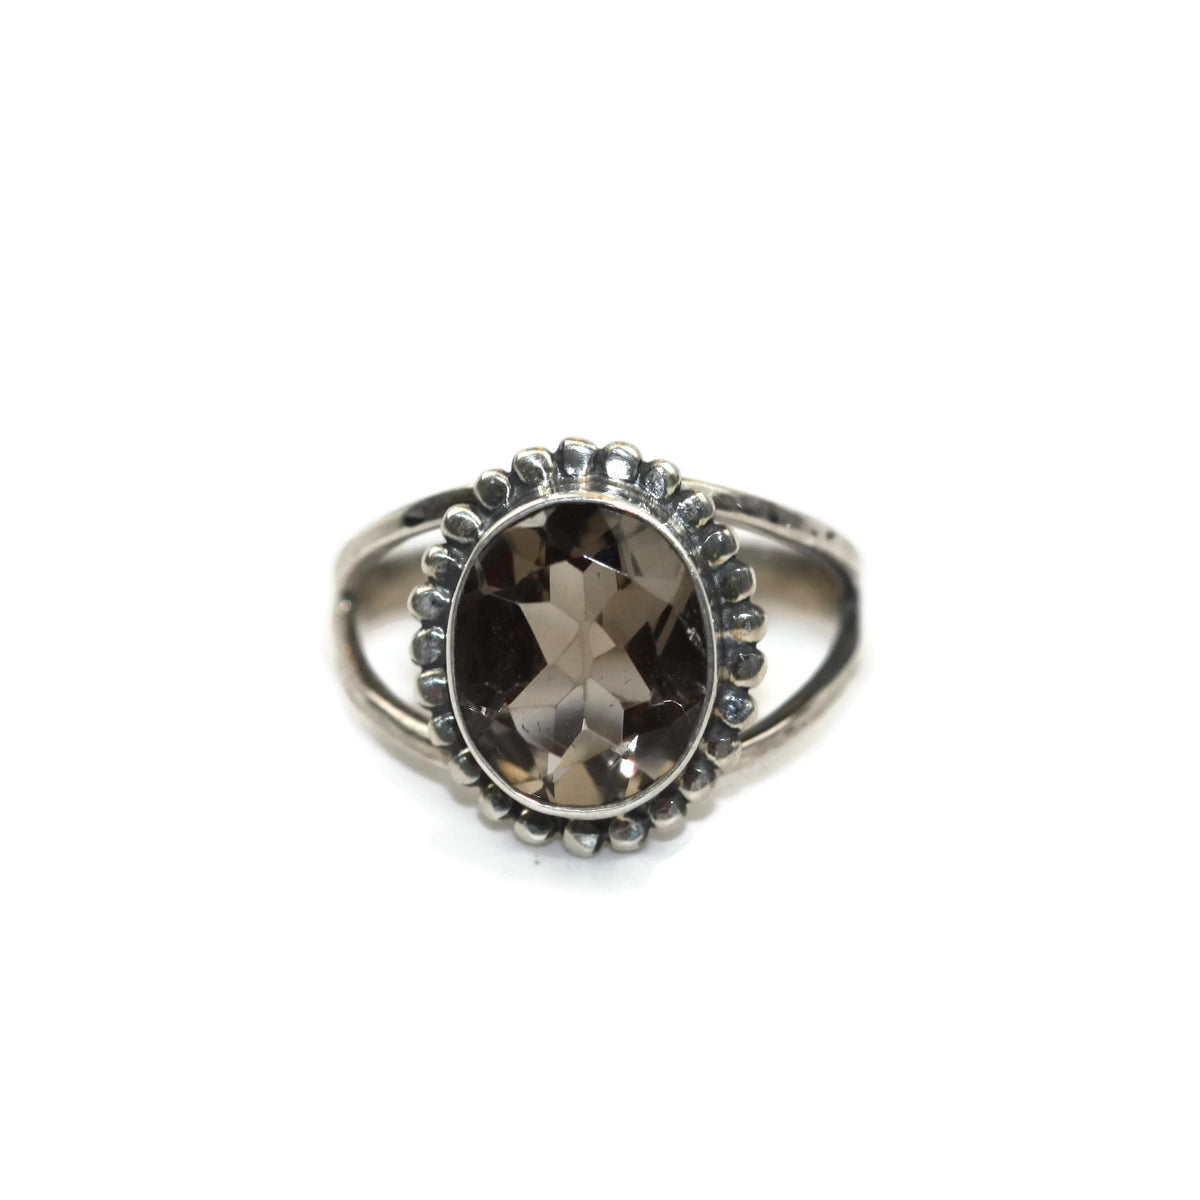 Handmade Sterling Silver Oval Faceted Smoky Quartz Gemstone Flower Ring